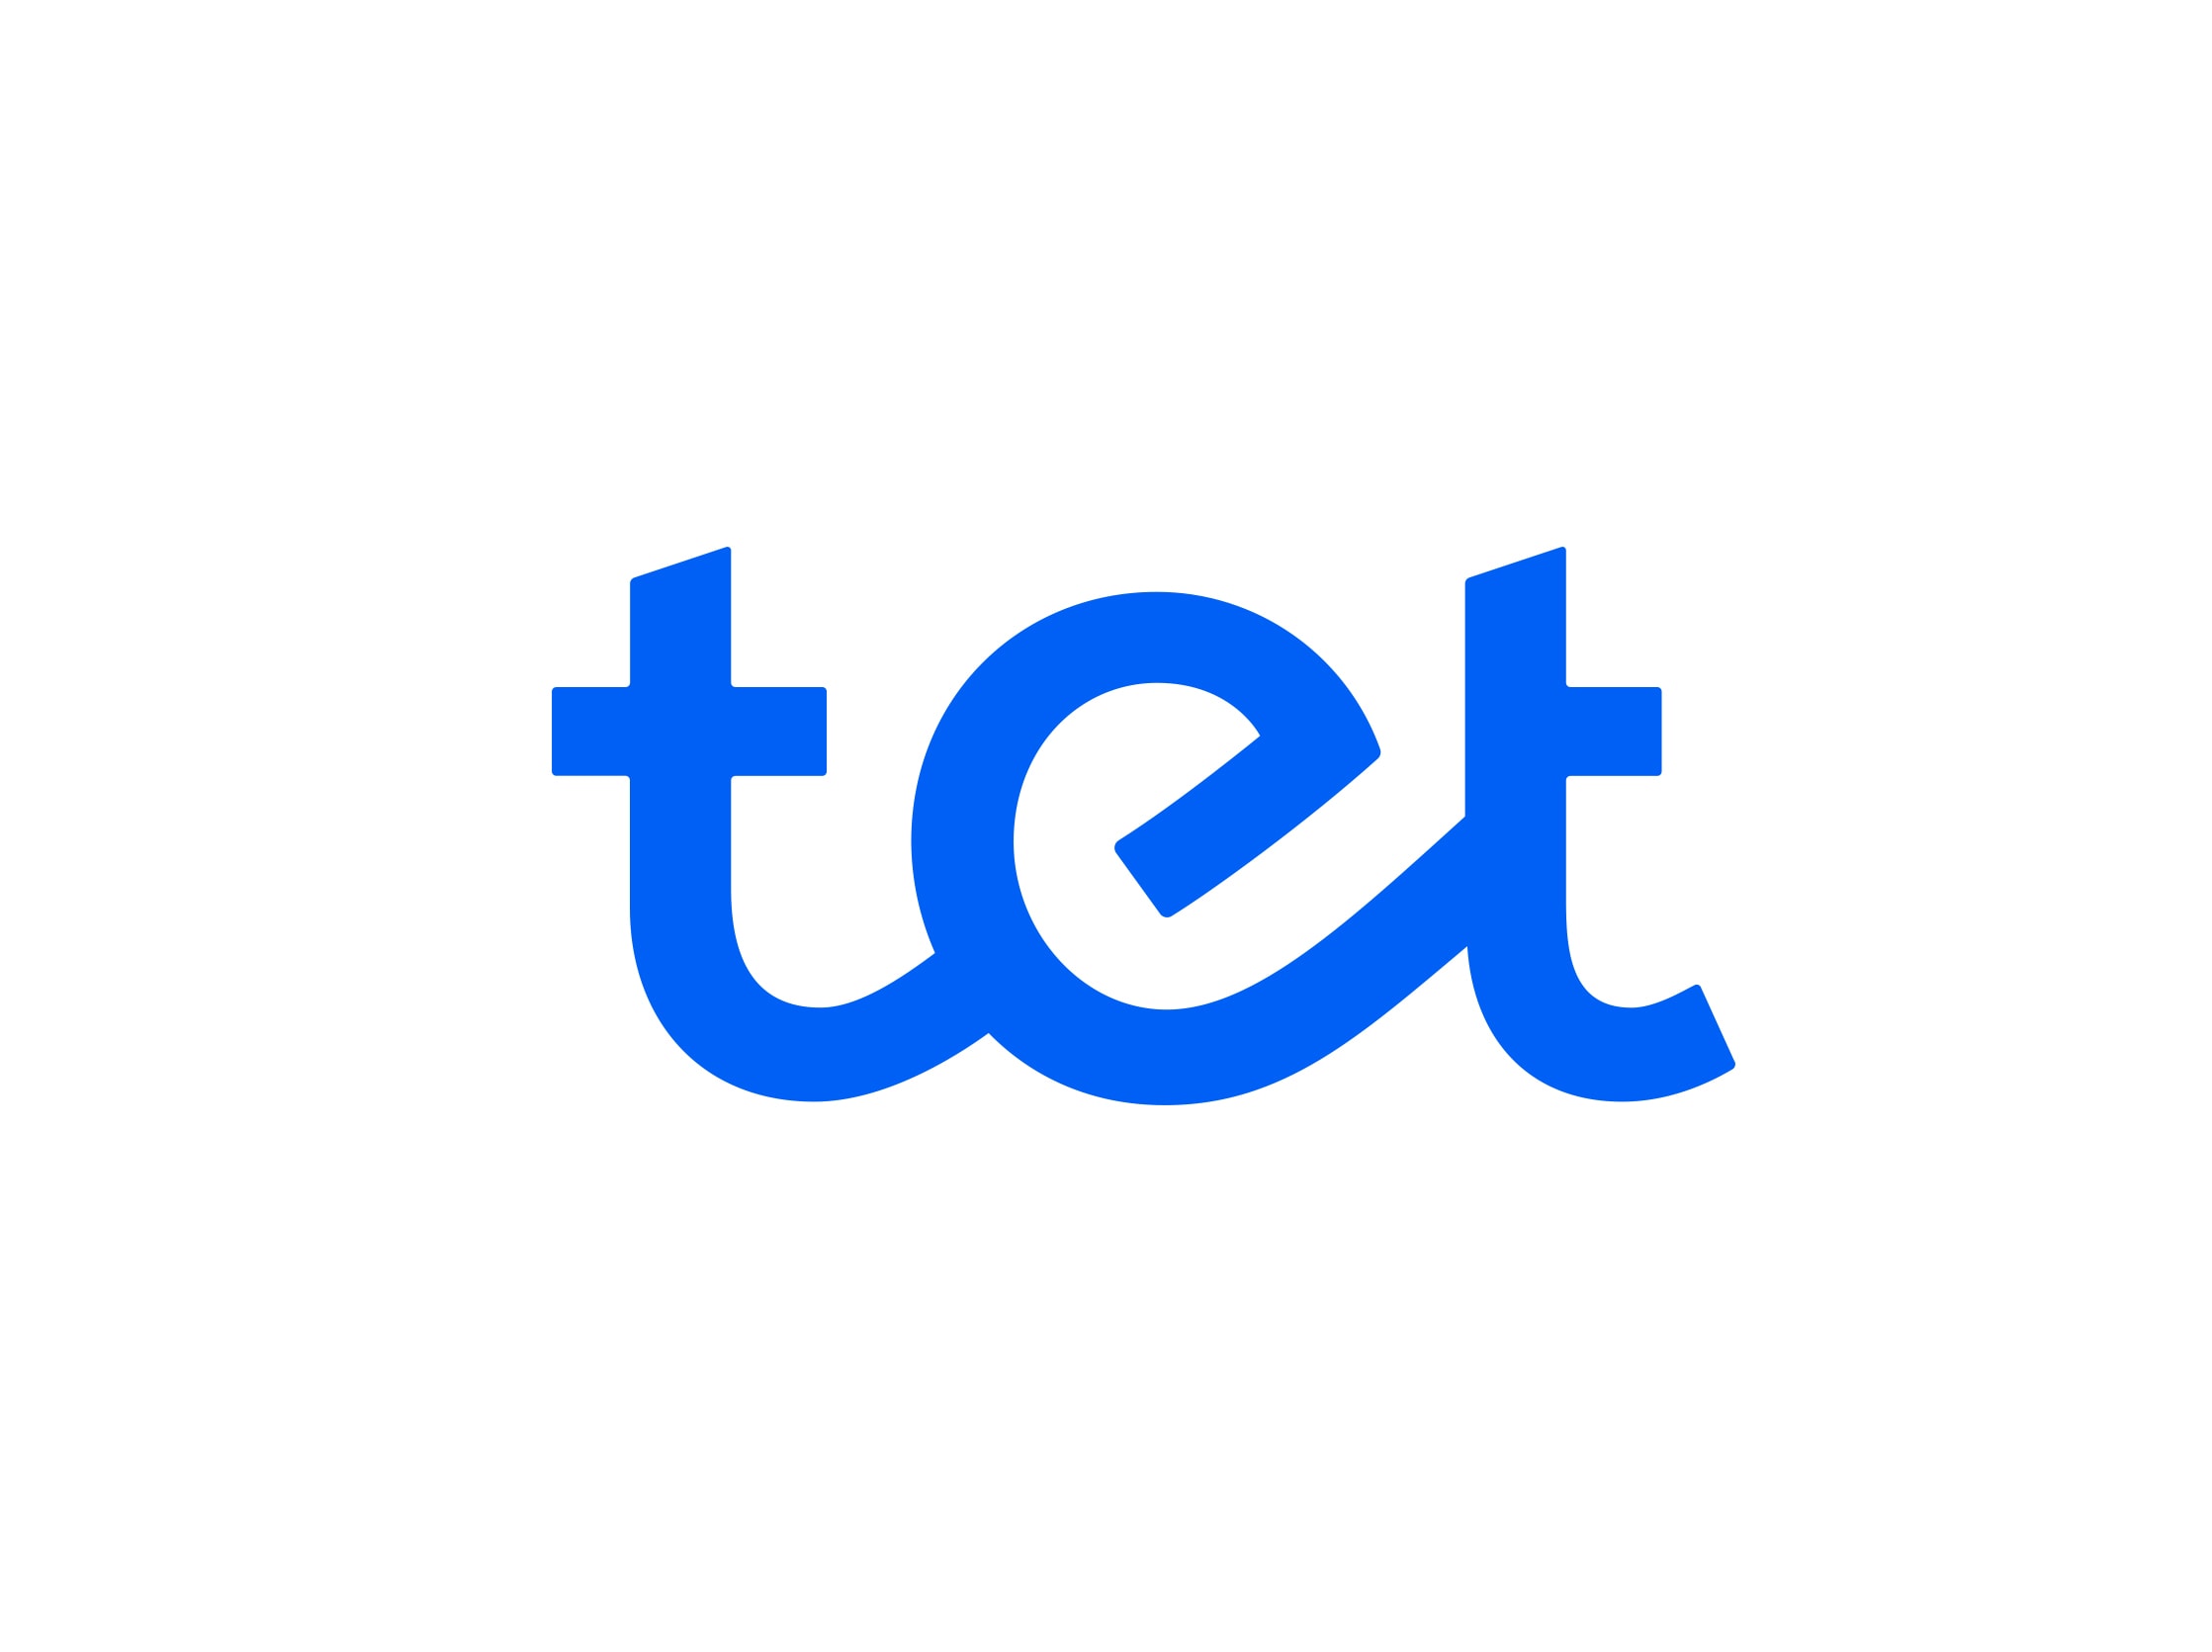 Логотип компании Tet